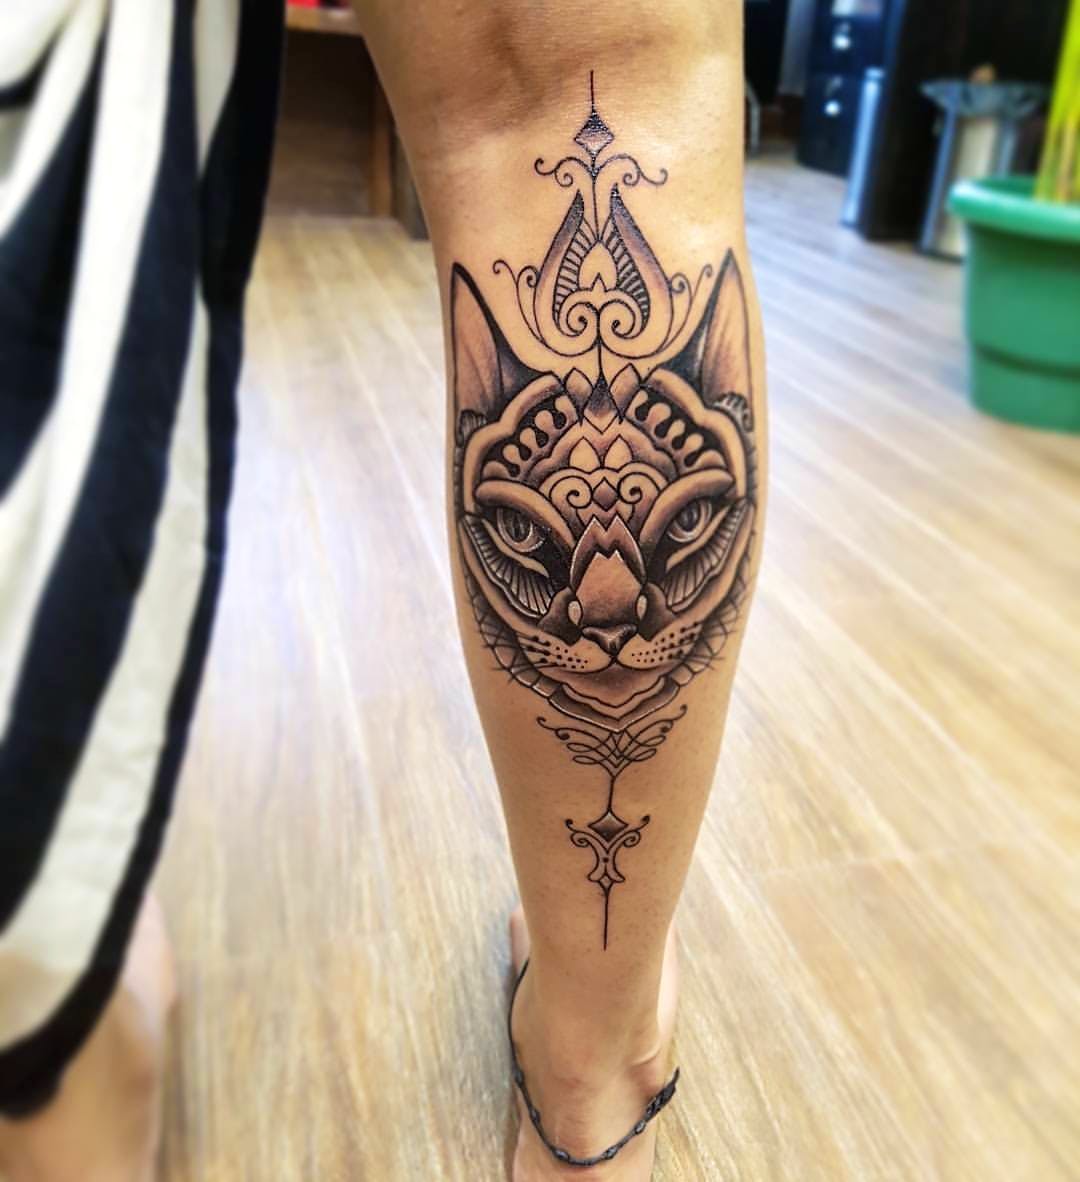 565 Likes, 1 Comments - Inkinn tattoo studio (@inkinntattoostudio) on  Instagram: “May your new year be filled wit… | Life tattoos, Minimalist  tattoo, Unique tattoos